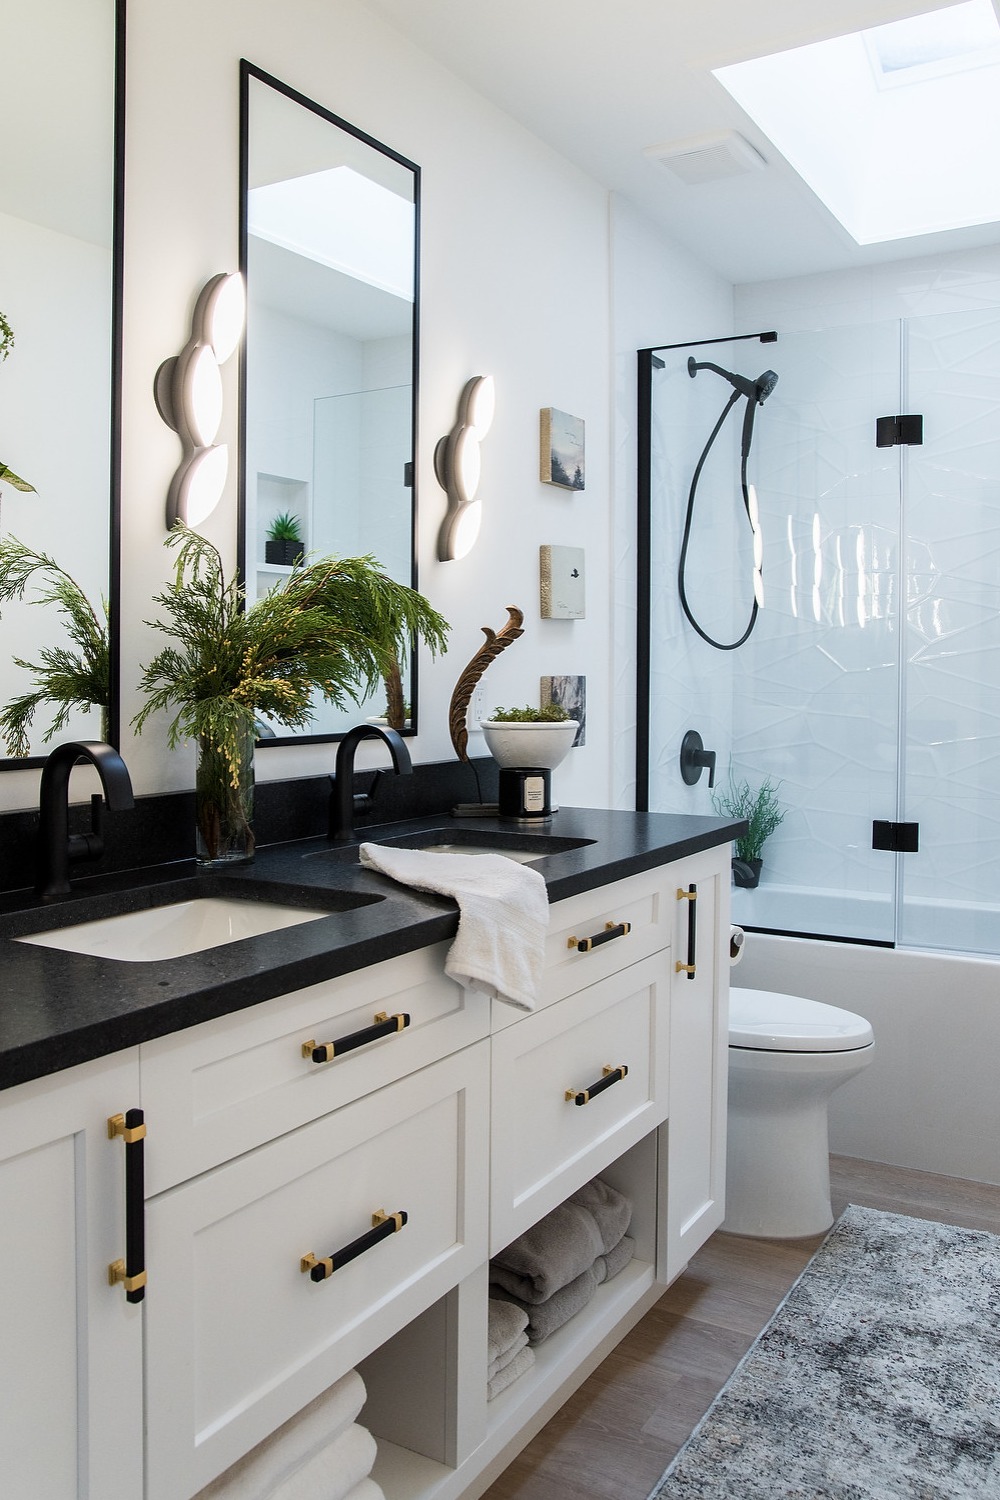 Tile Shower Bathroom Remodel Re Bath Black Countertop White Vanity Cabinet Handles Floor